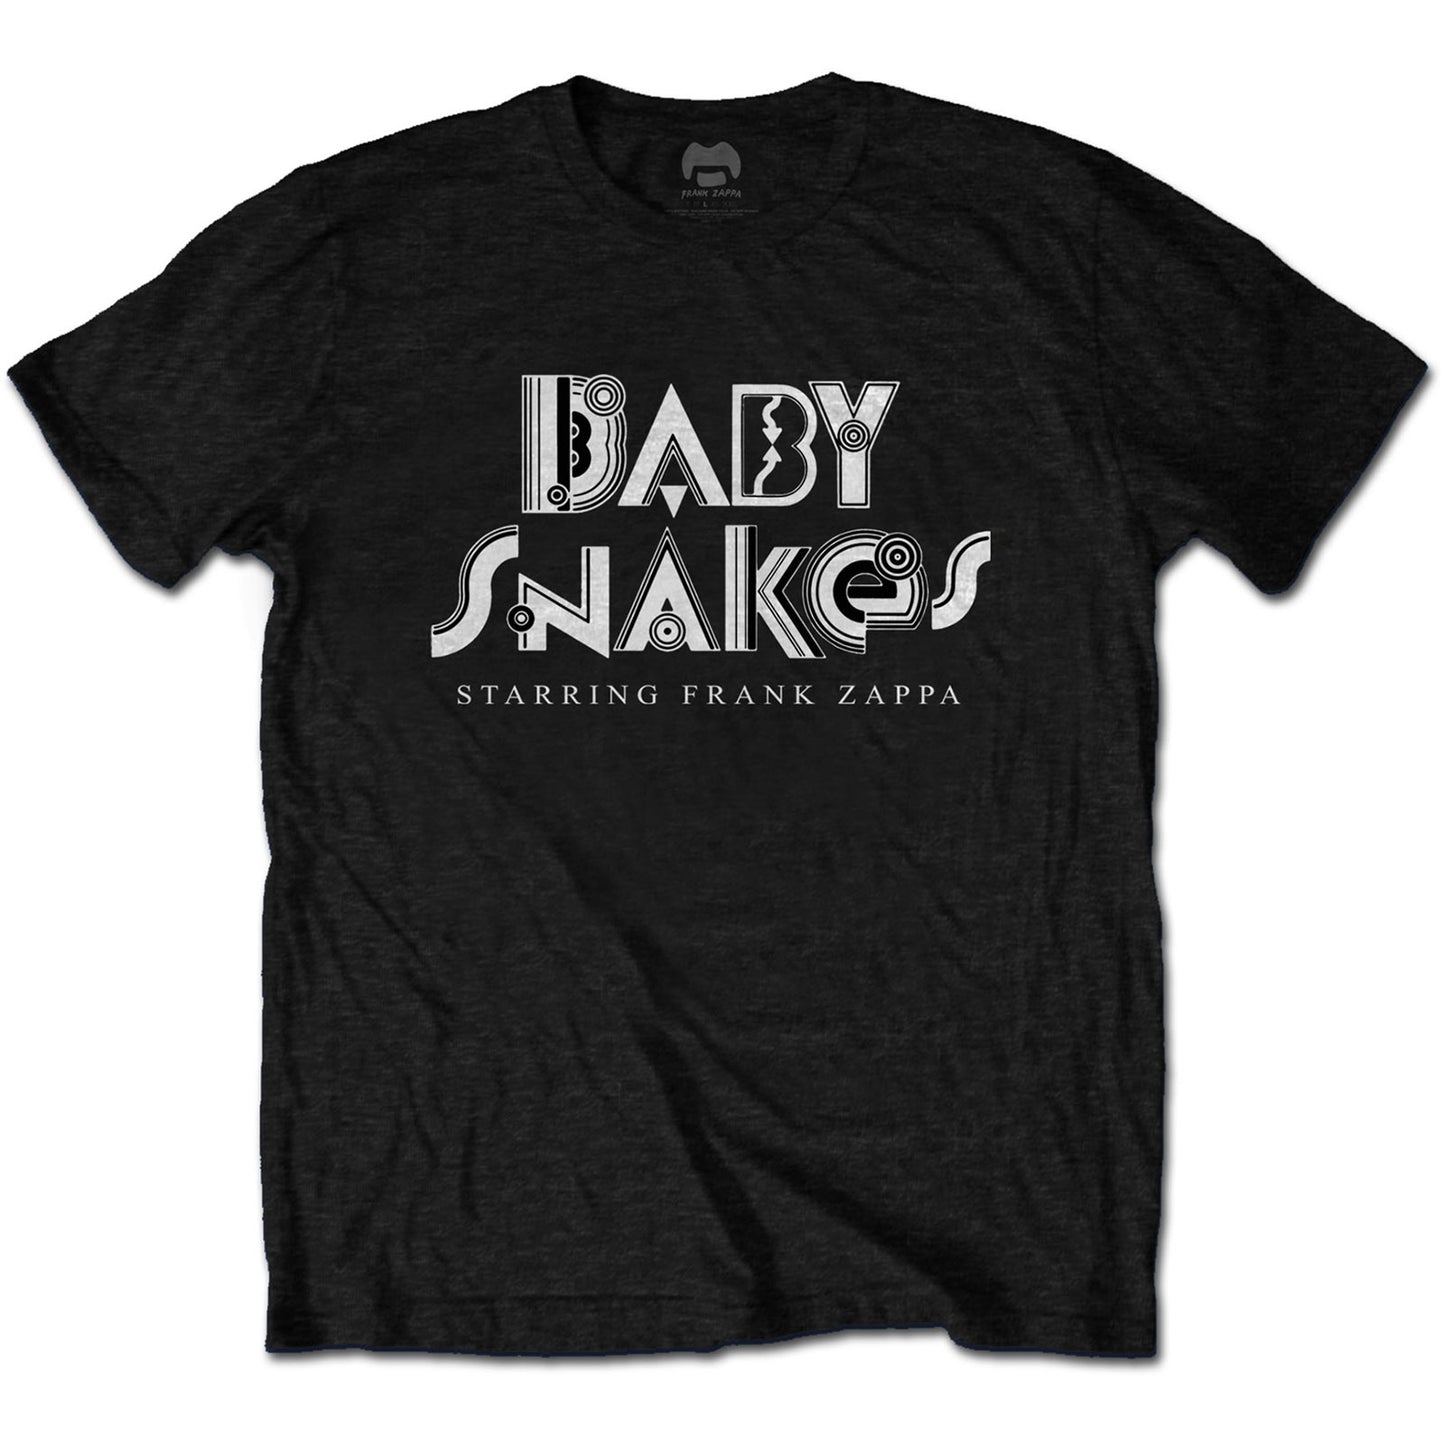 Frank Zappa T-Shirt: Baby Snakes